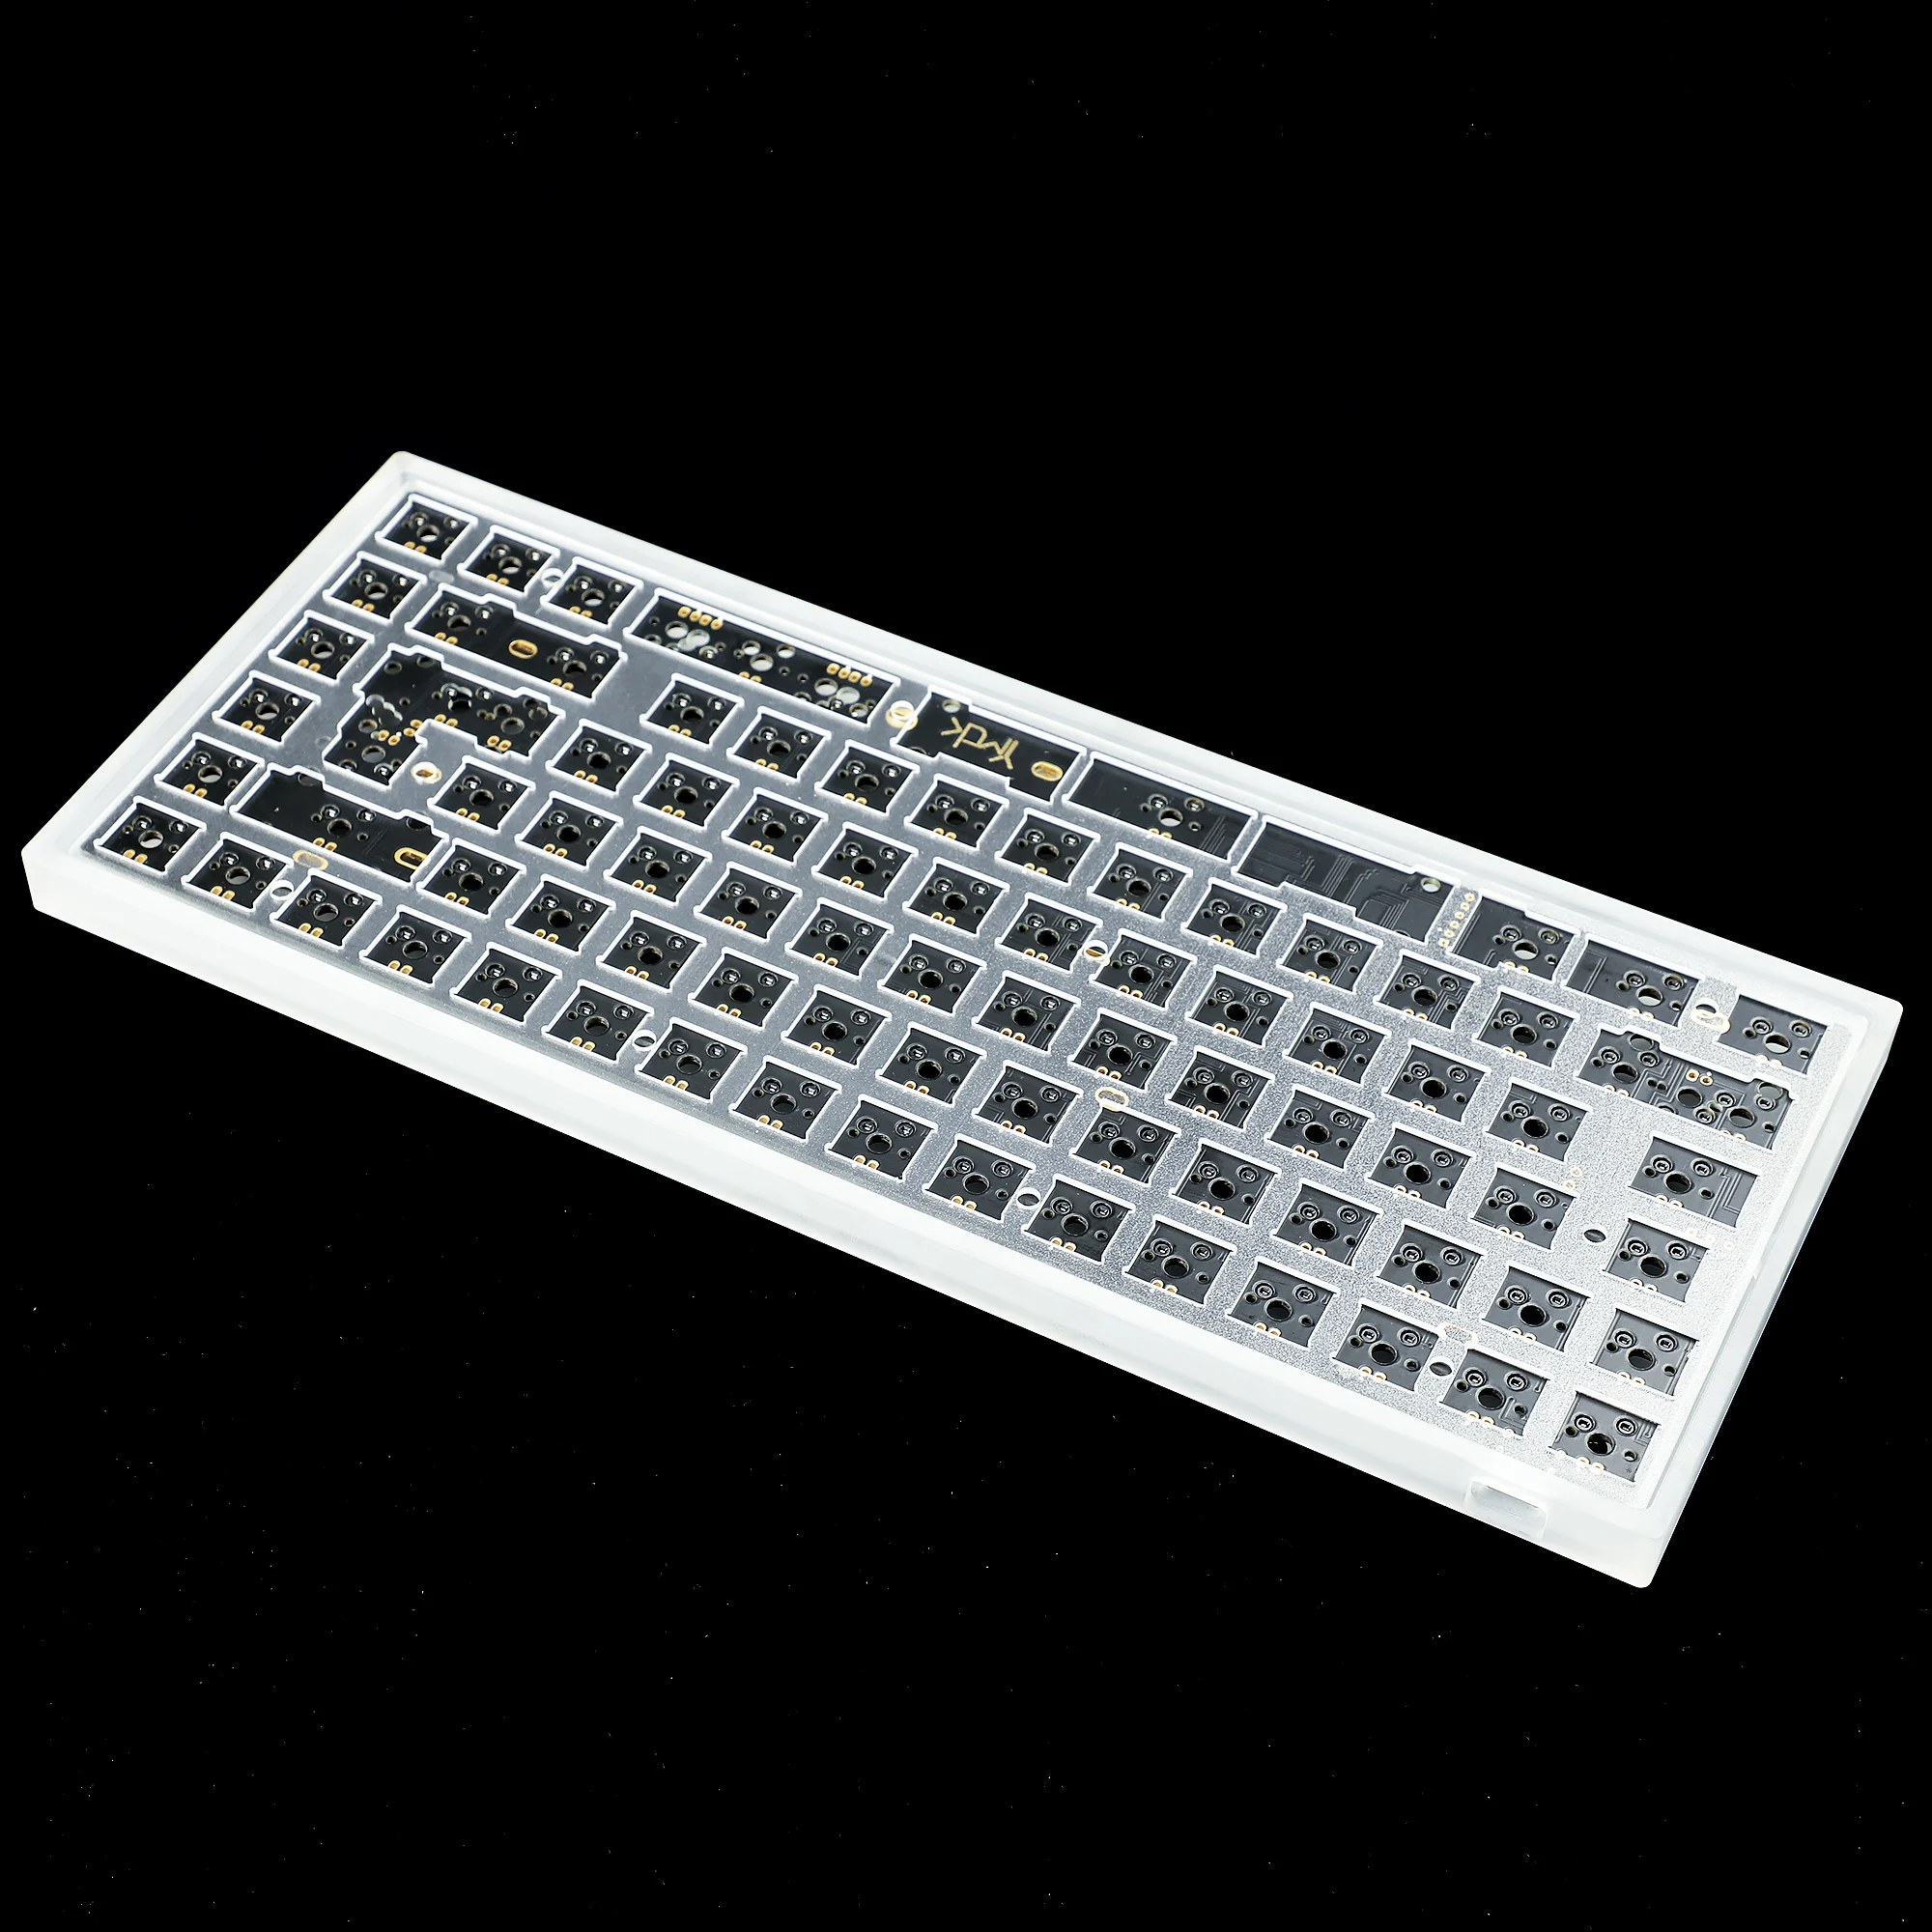 75% 84 PC Plate Polycarbonate ANSI ISO Layout  For KBD75 YMD75 V1 V2 V3 PCB Case 75V3 Mechanical Keyboard Laptop Keyboards